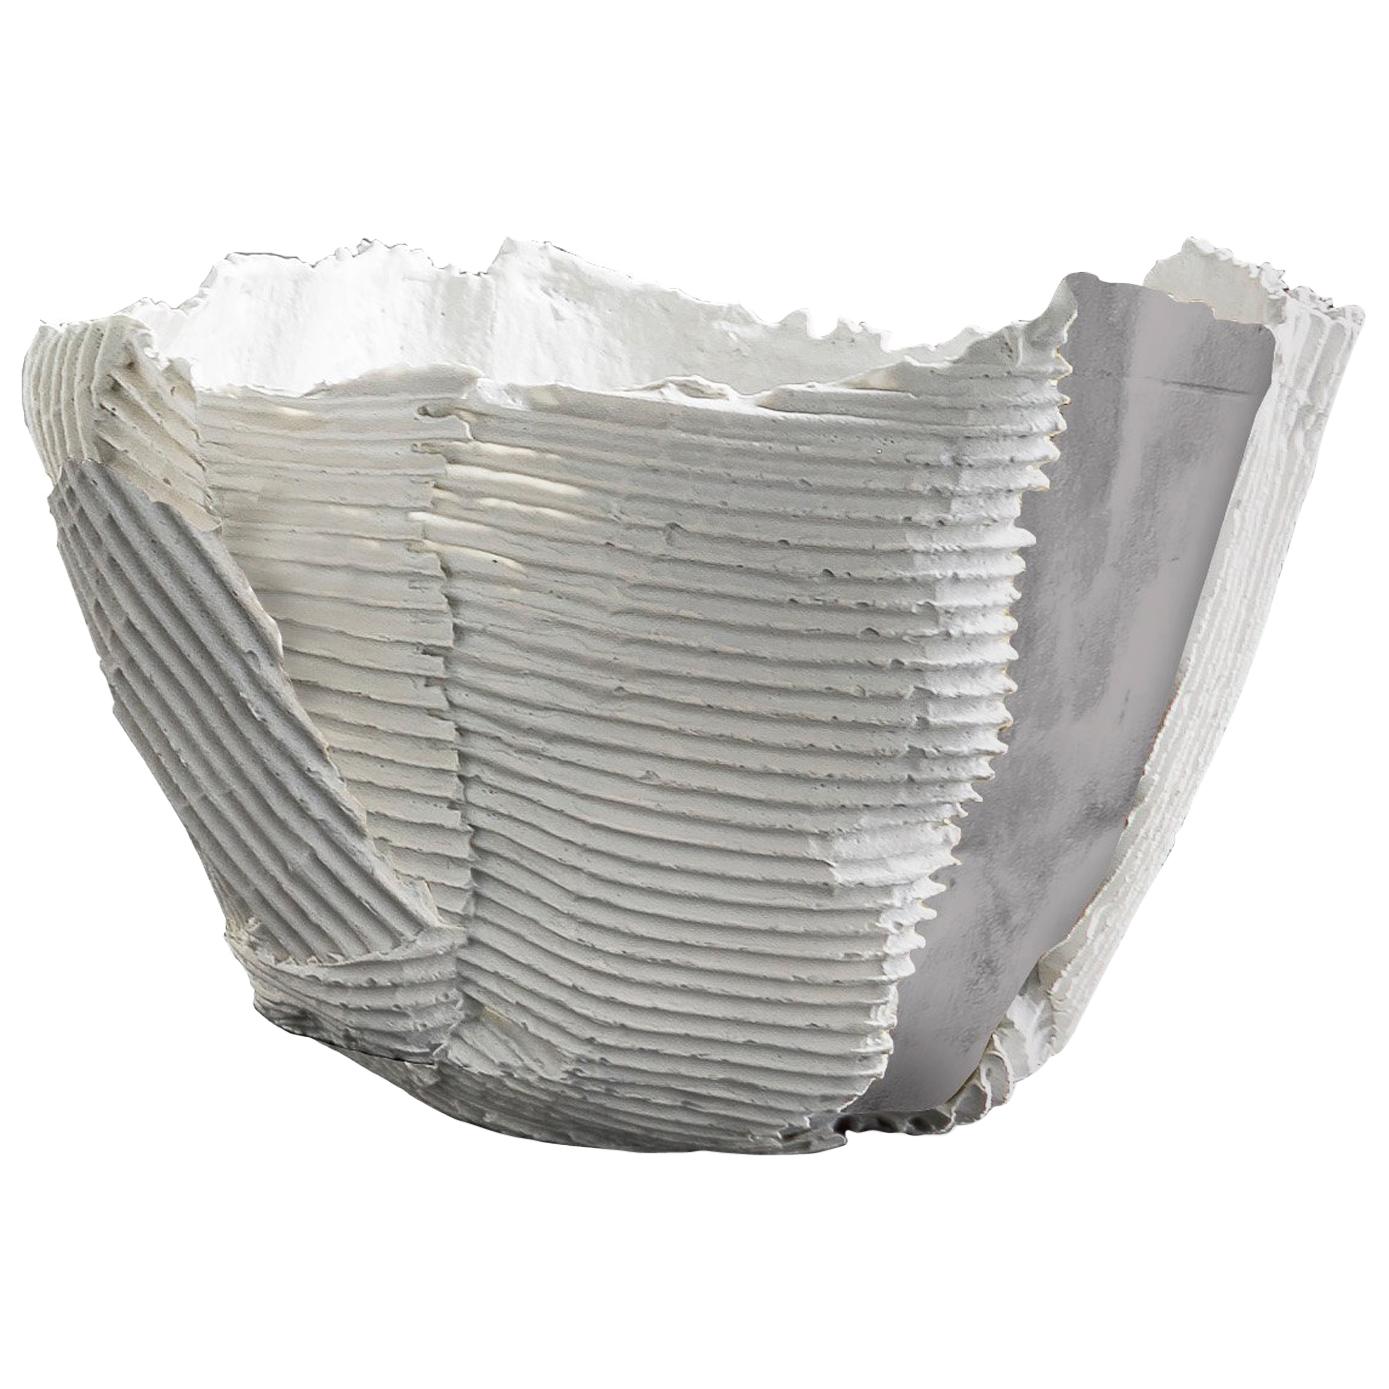 Bol contemporain en céramique Cartocci Texture blanc et gris en vente